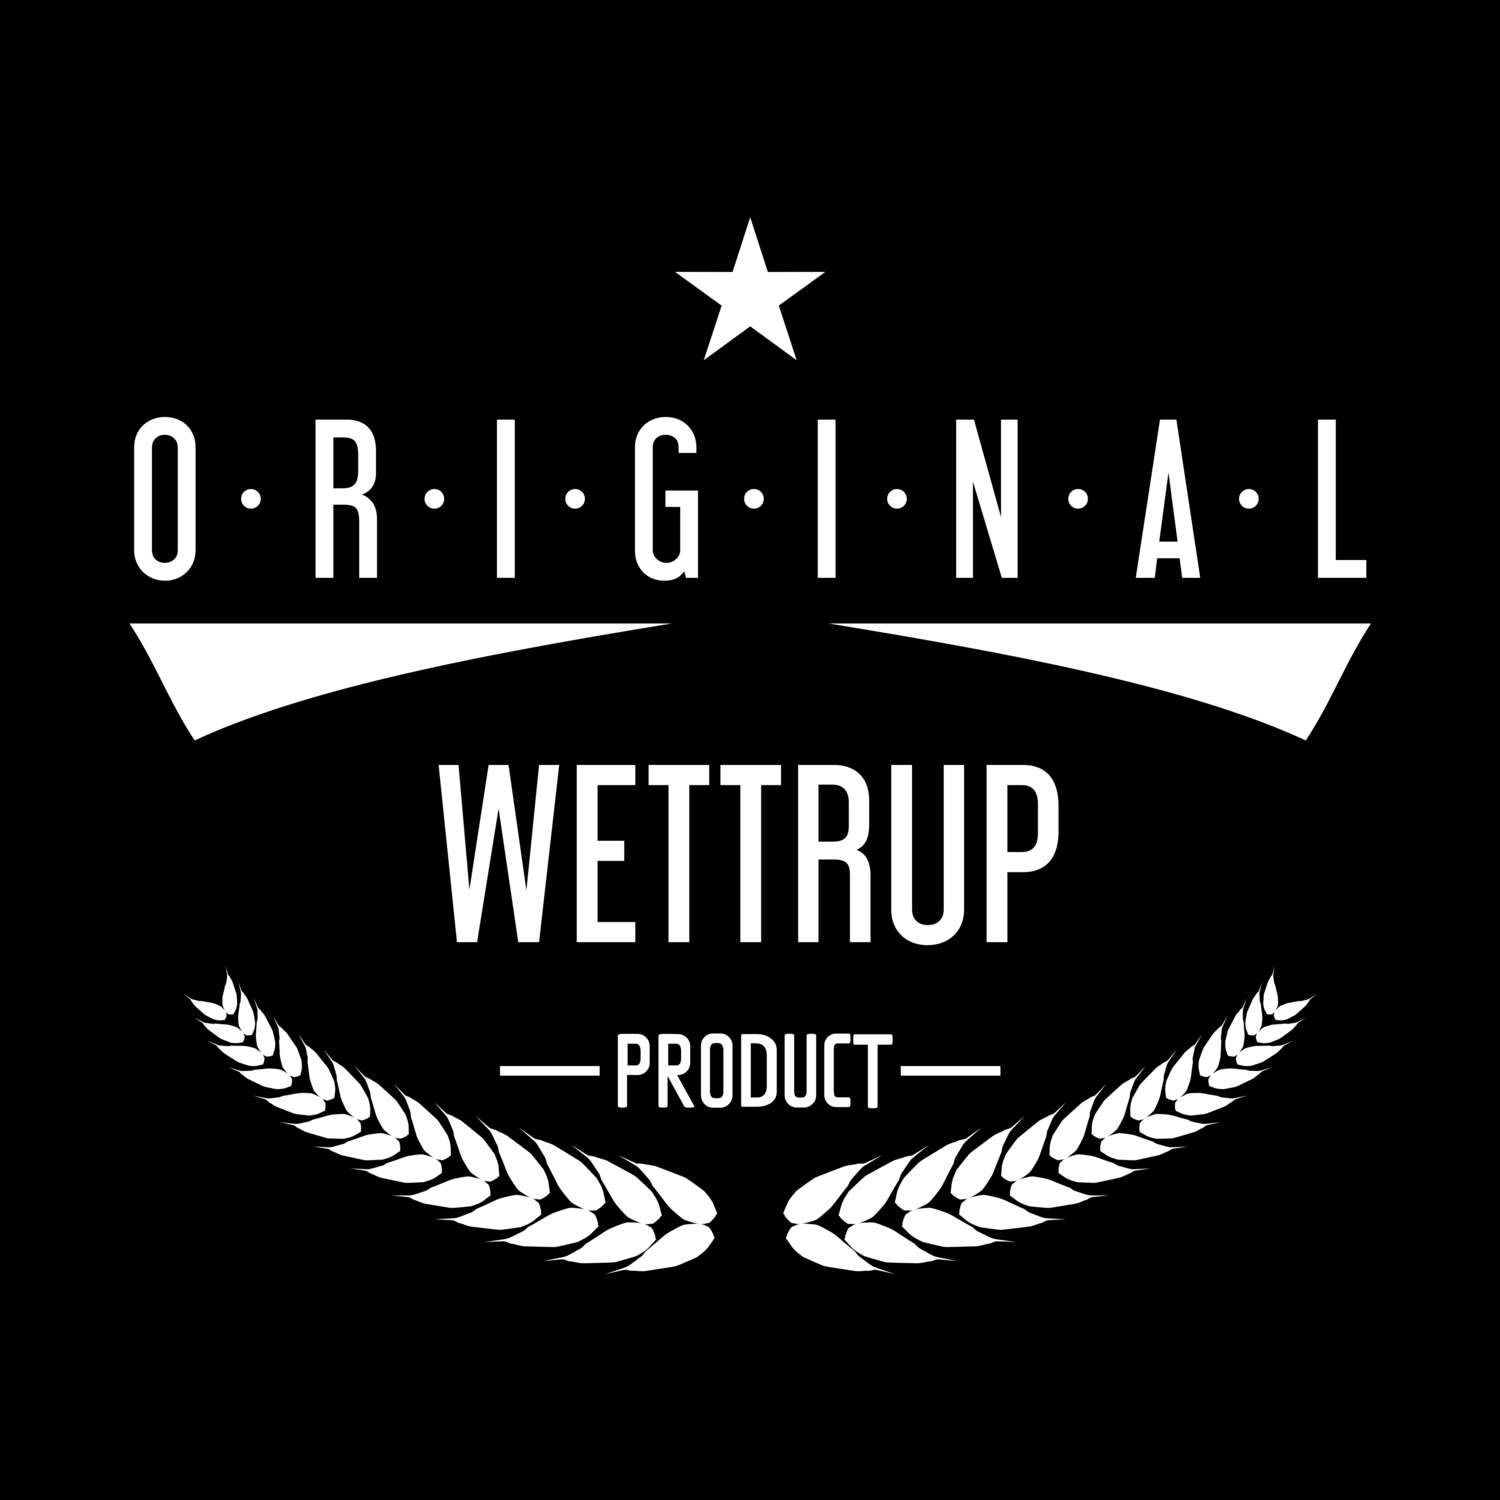 Wettrup T-Shirt »Original Product«